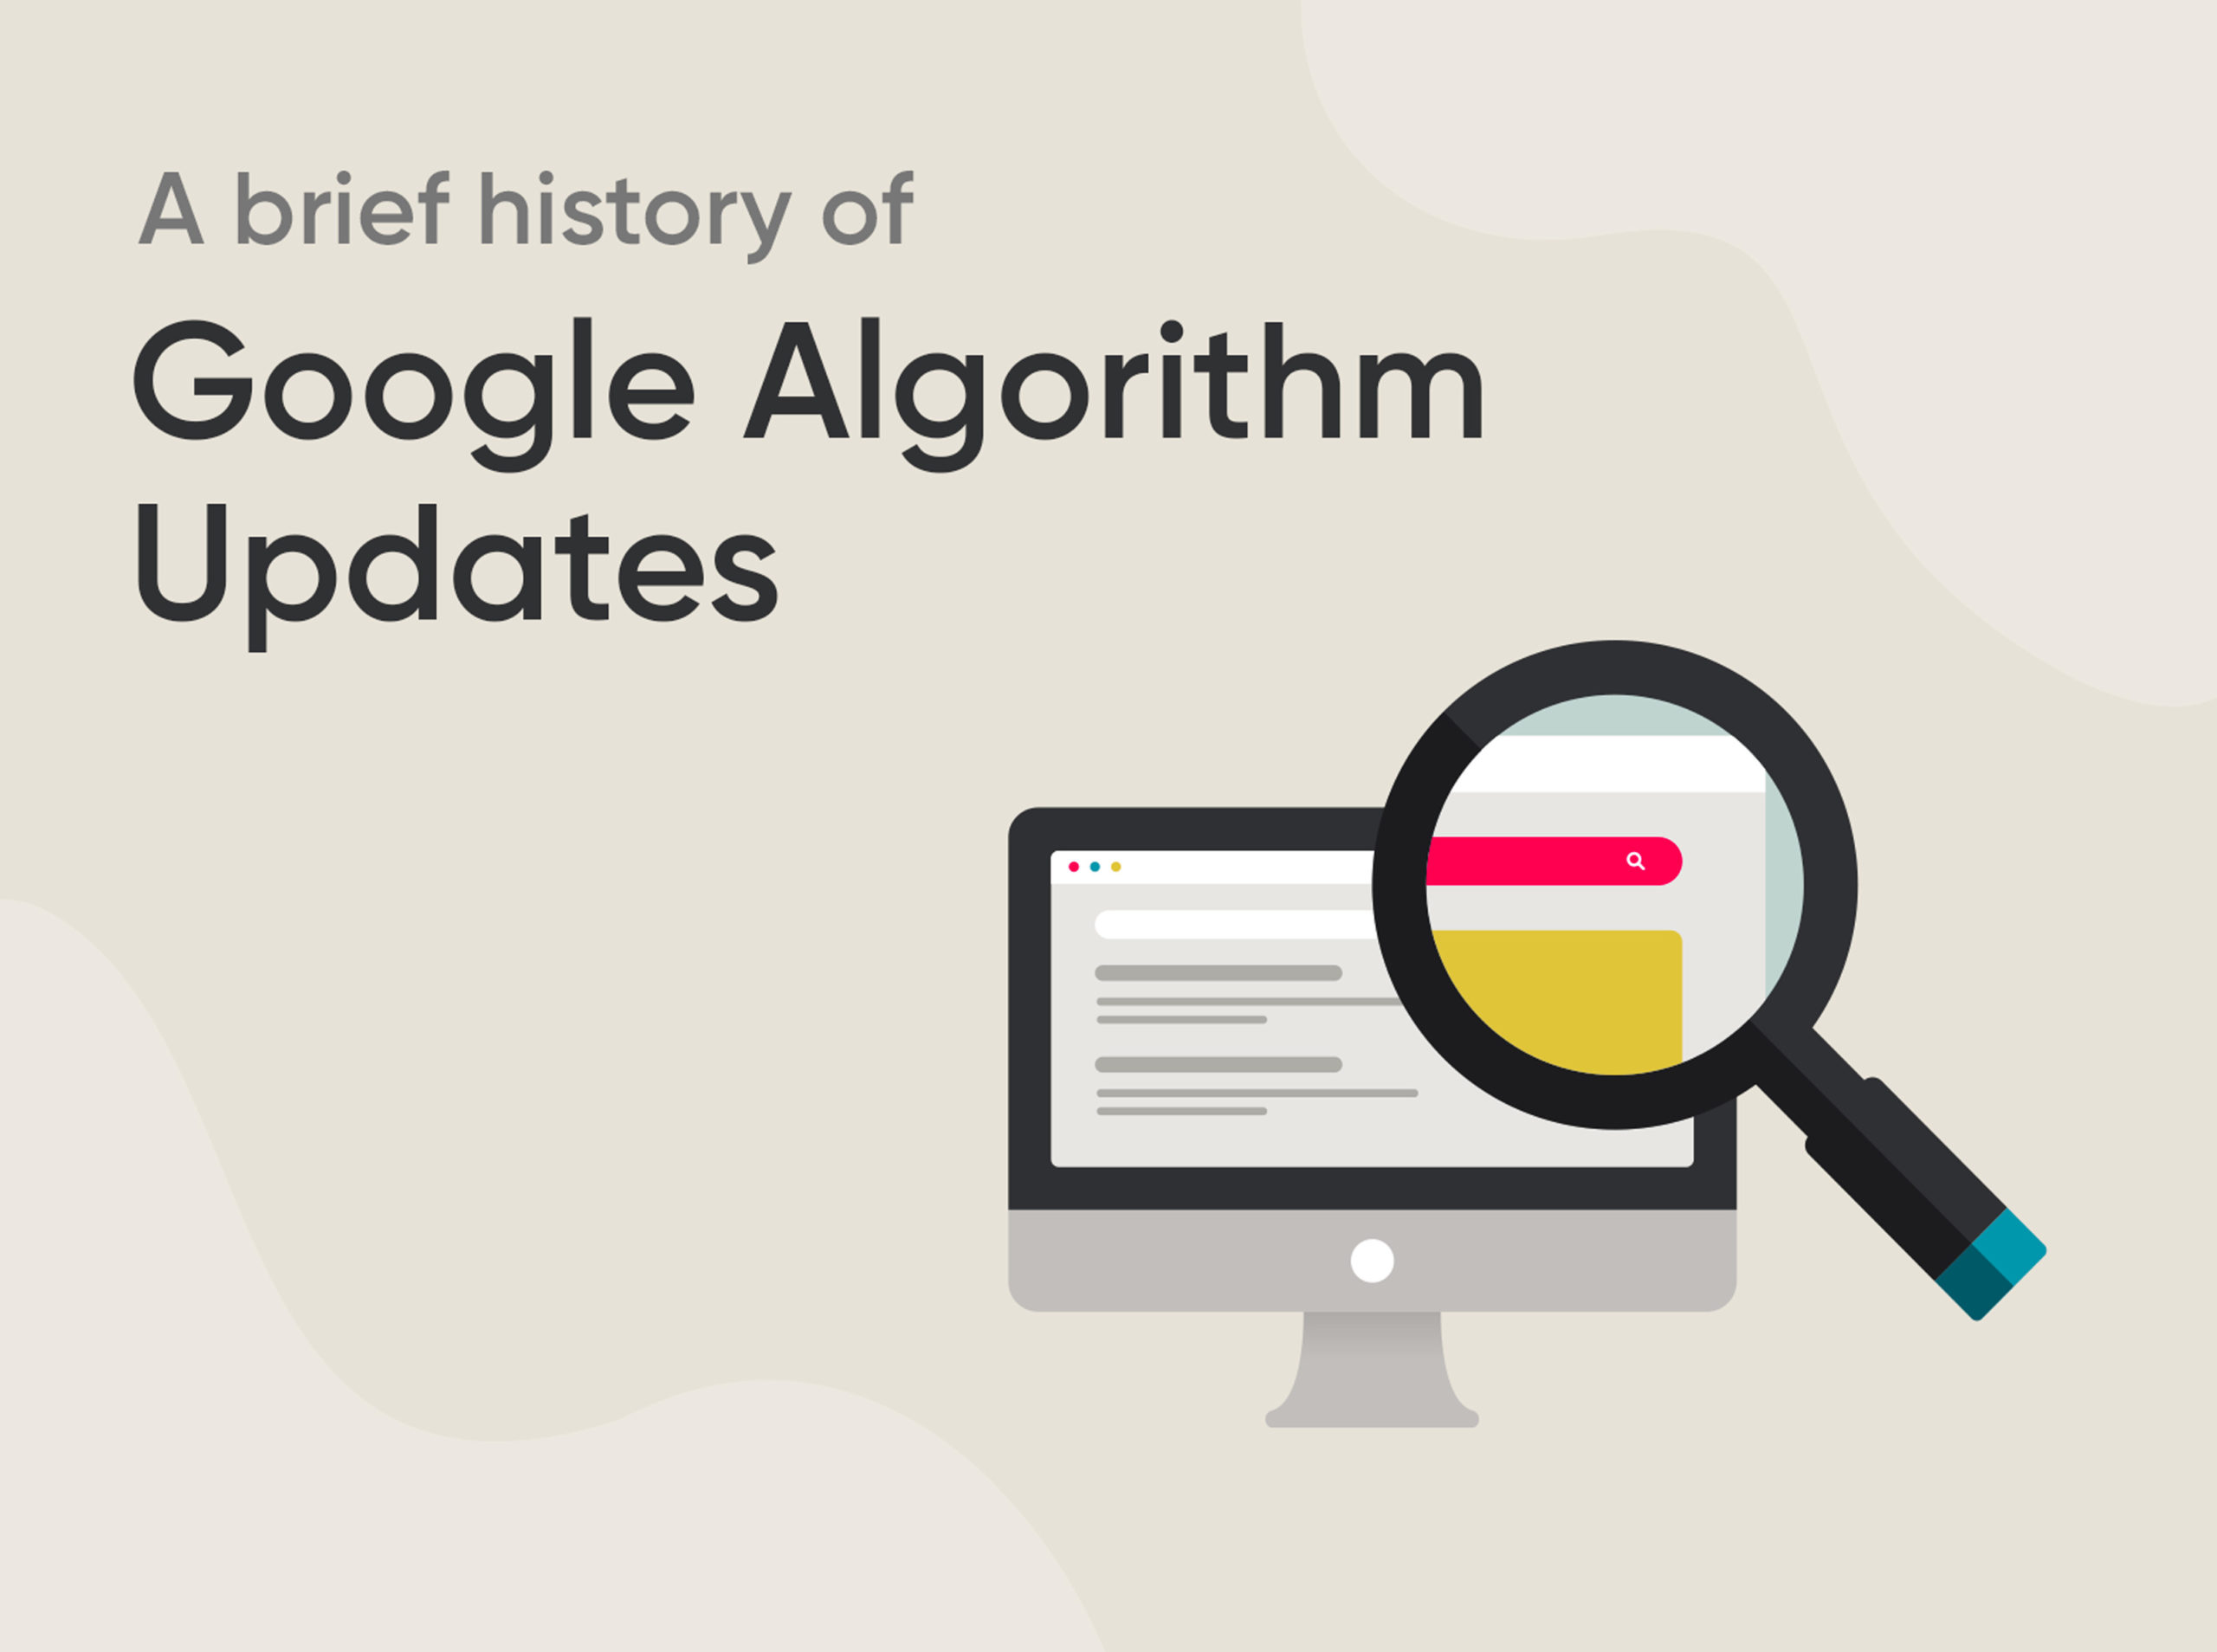 A brief history of Google algorithm updates